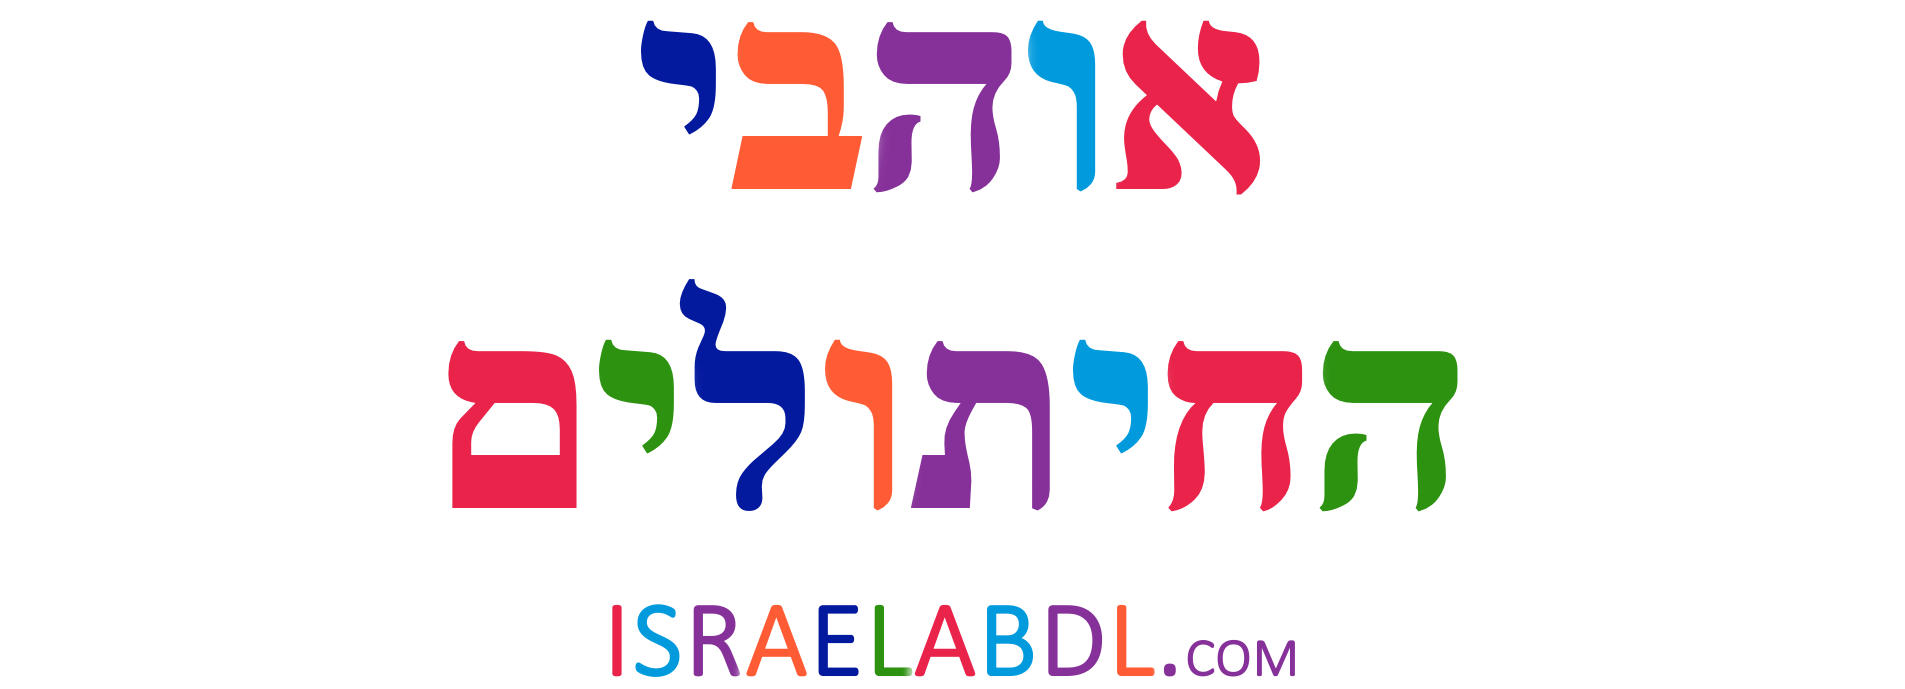 www.israelabdl.com